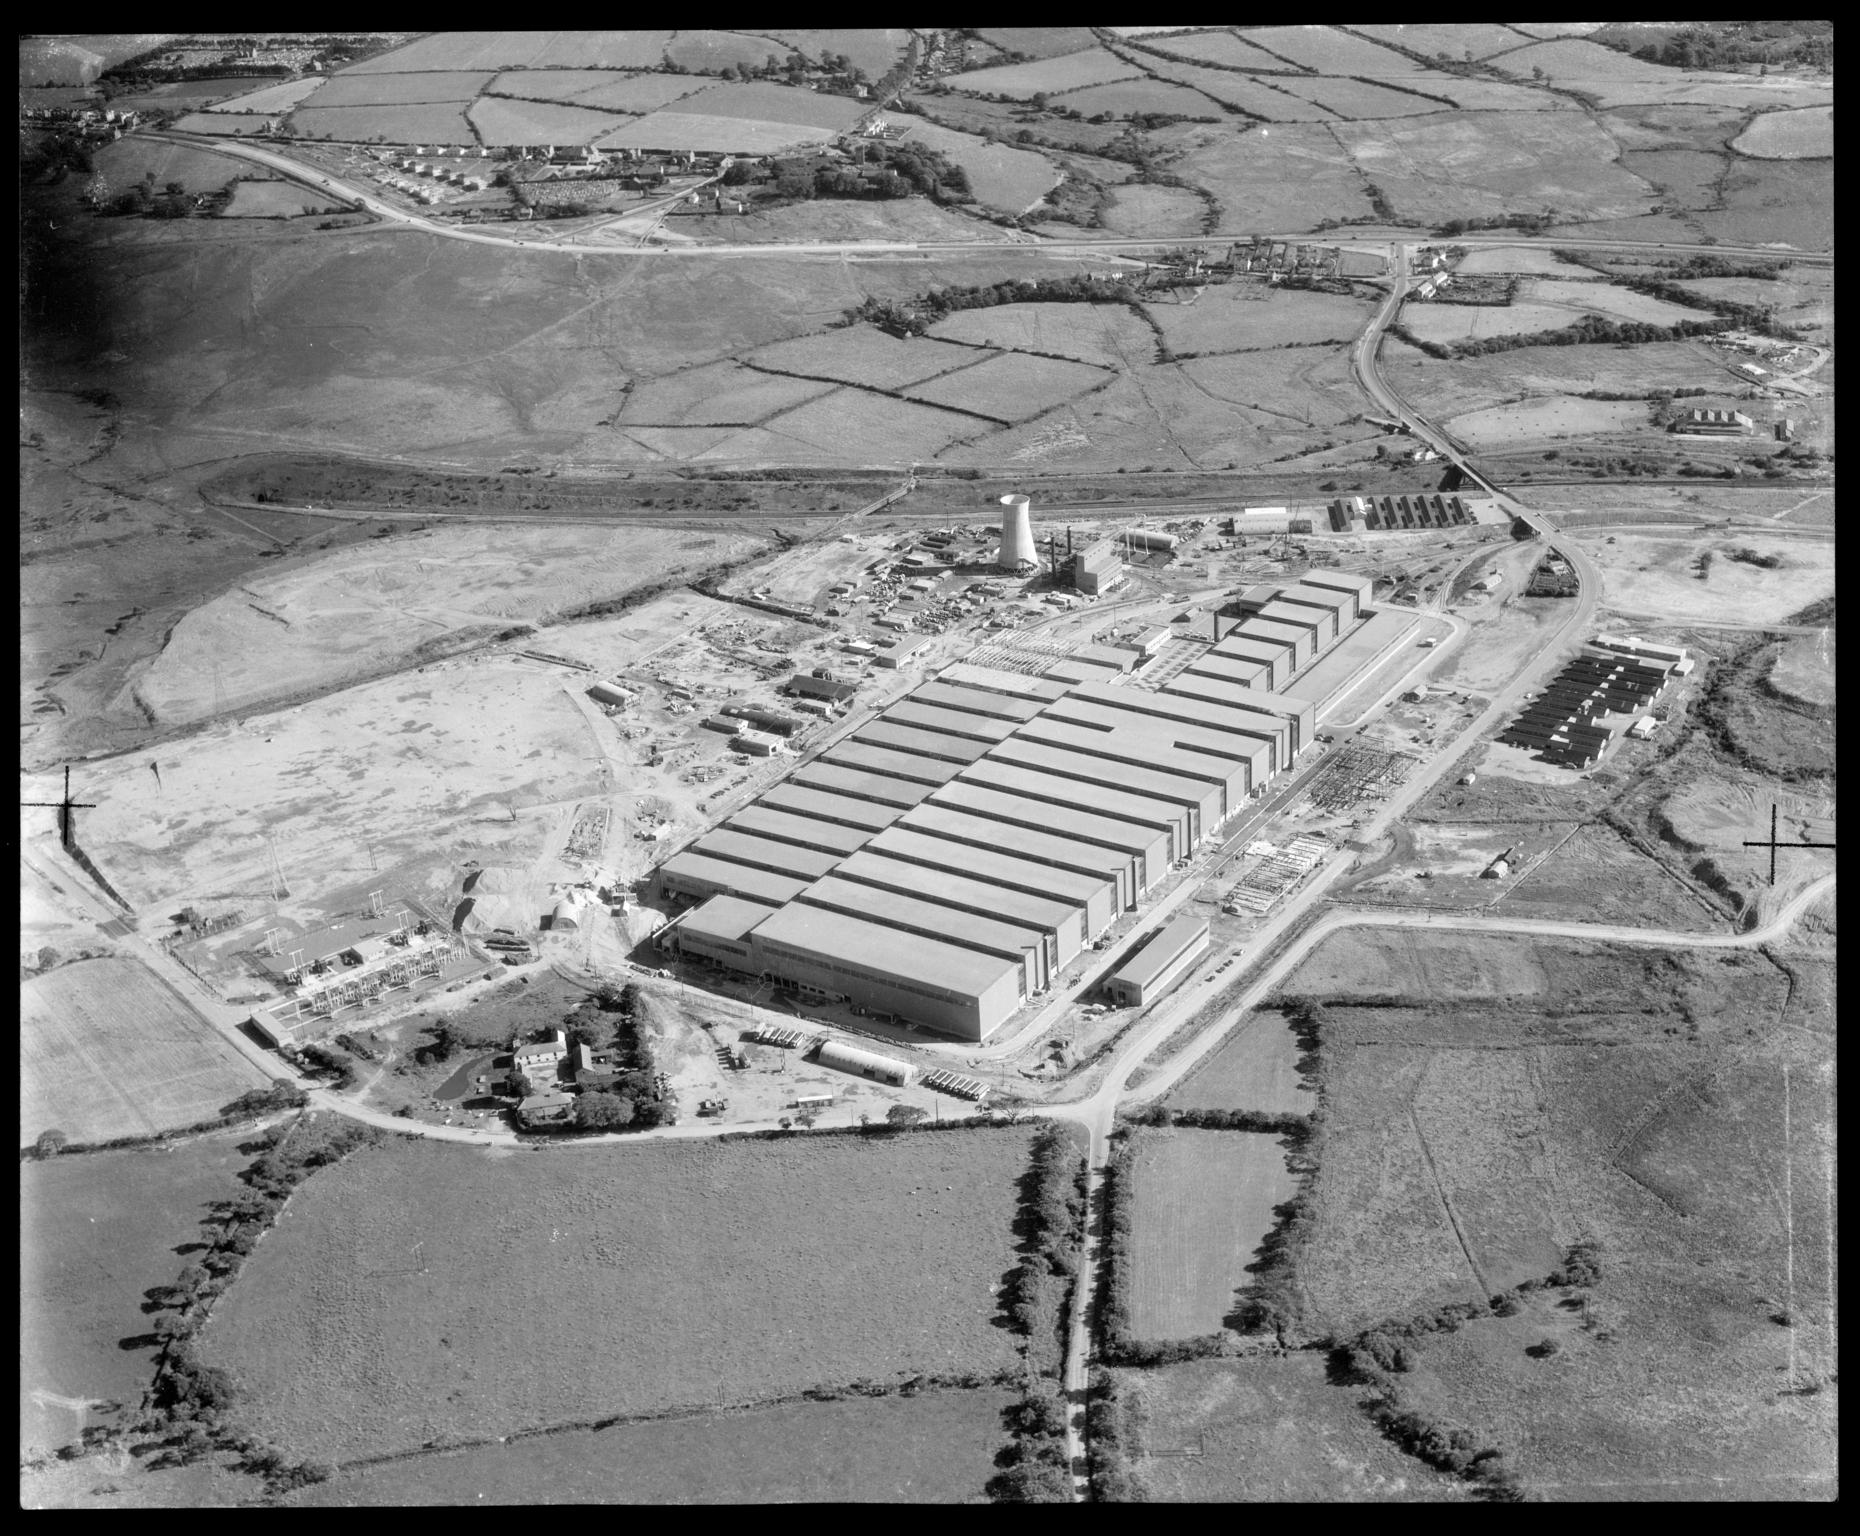 Steel Company of Wales, film negative